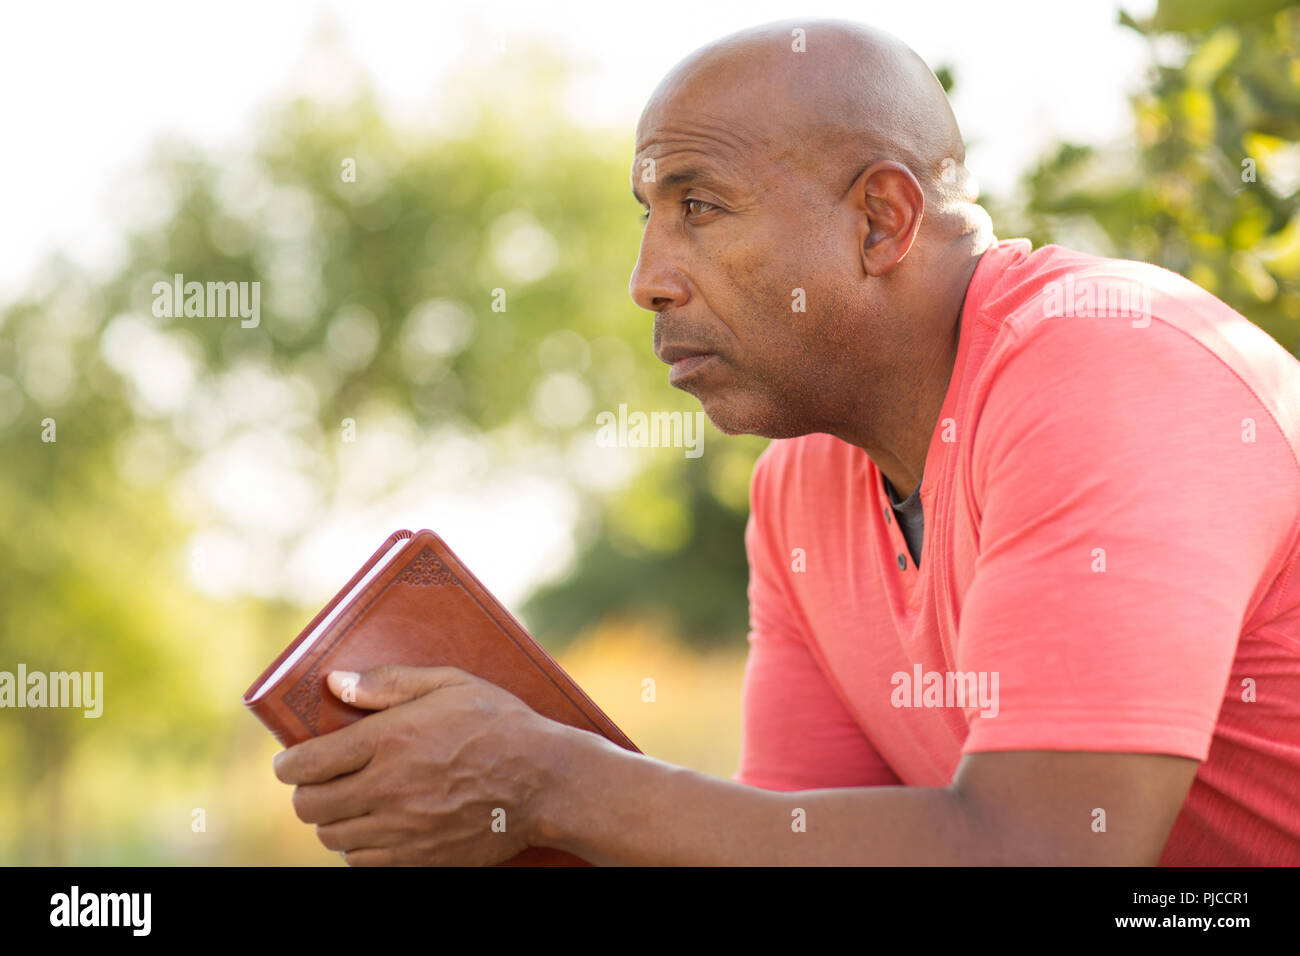 African American man beten und tief in Gedanken. Stockfoto